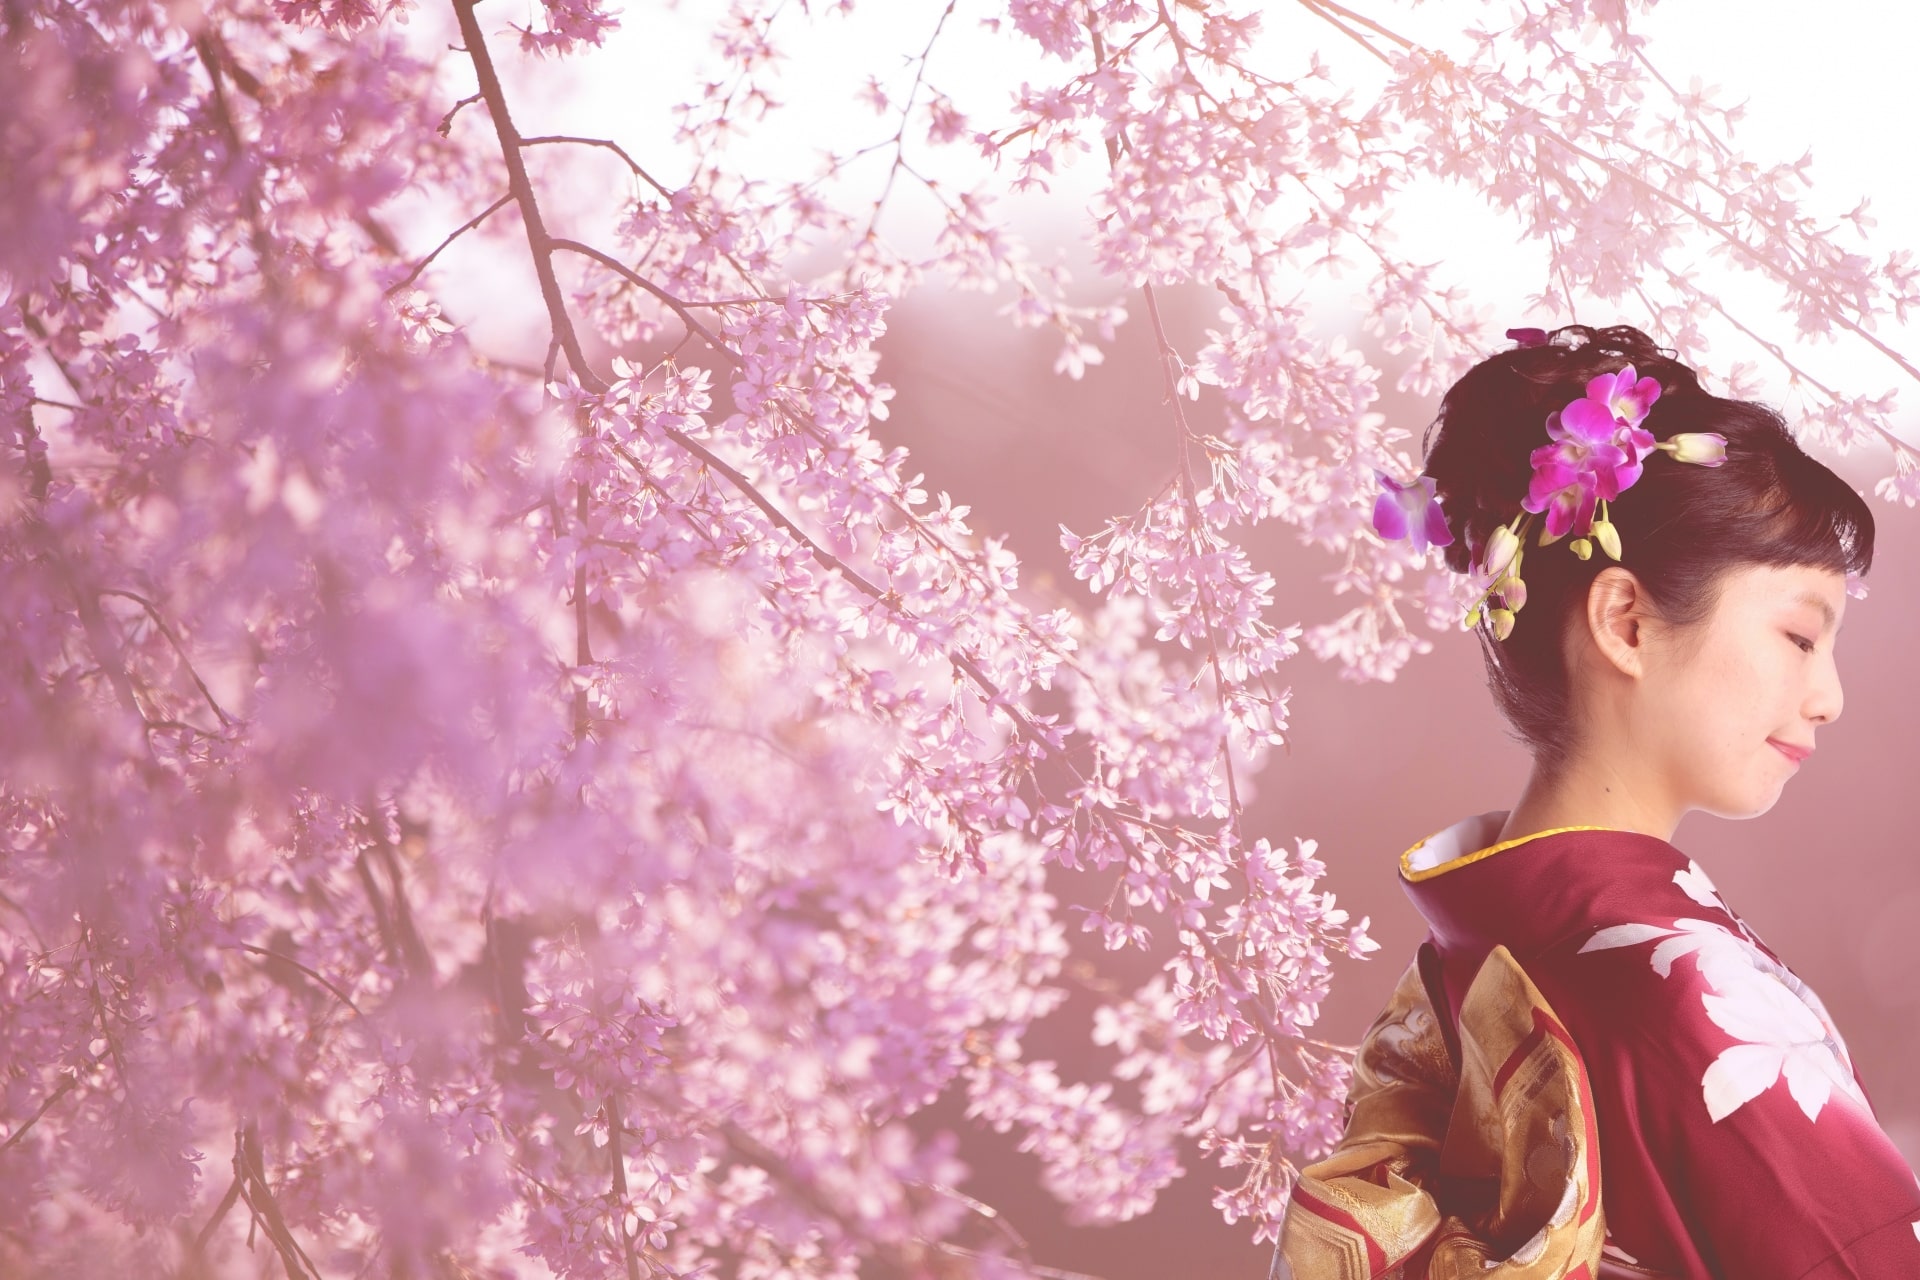 Cherry blossom viewing wearing Kimono